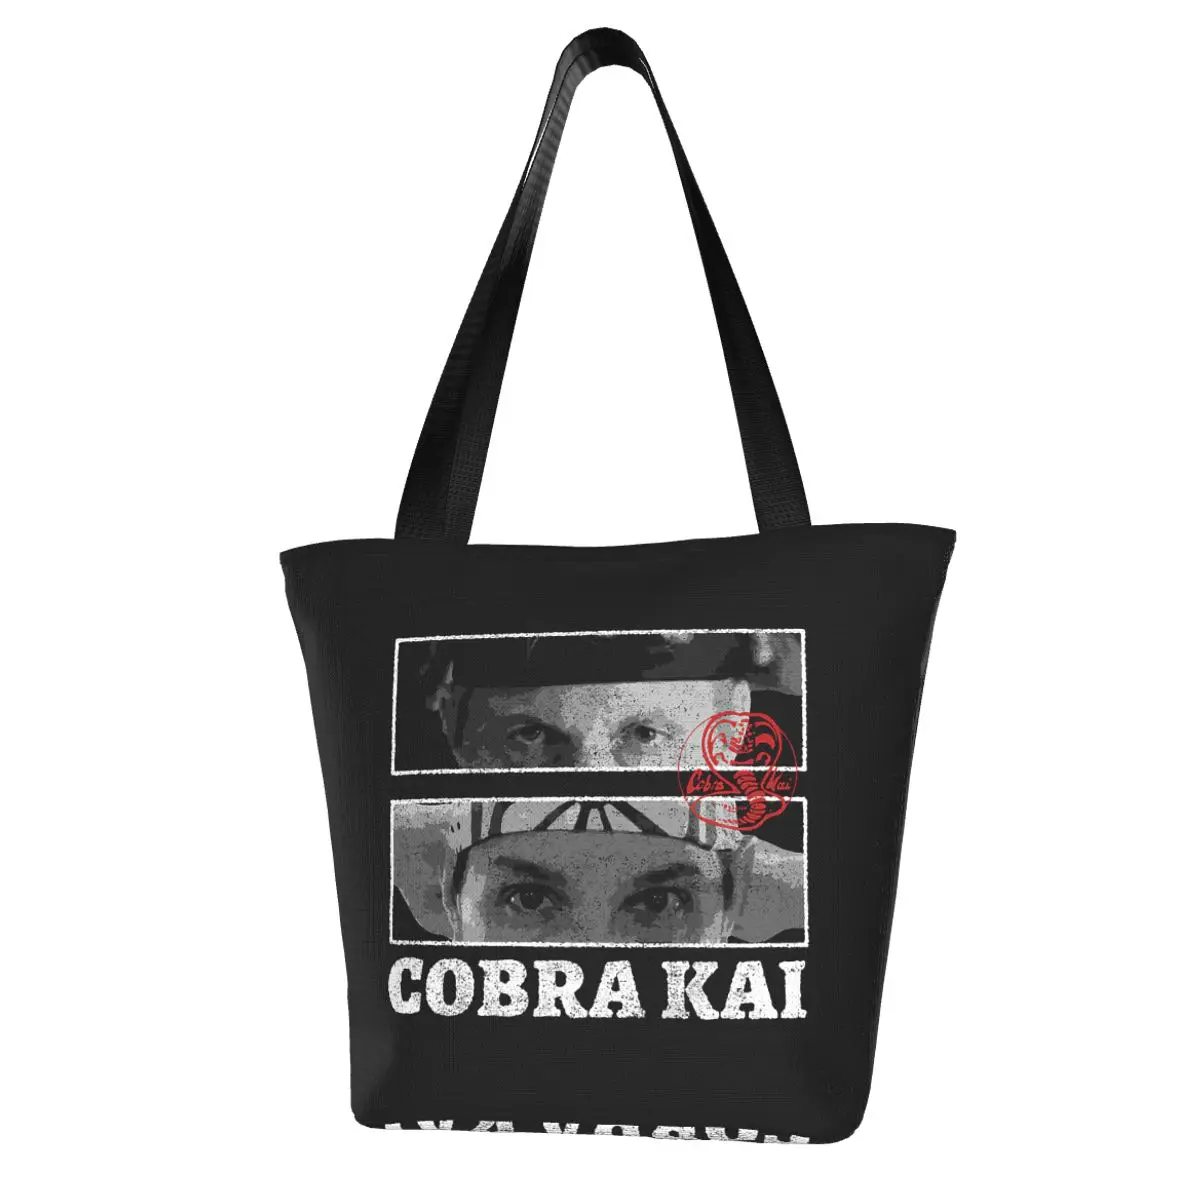 Cobra Kai Face Off Panels Shopping Bag Aesthetic Cloth Outdoor Handbag Female Fashion Bags